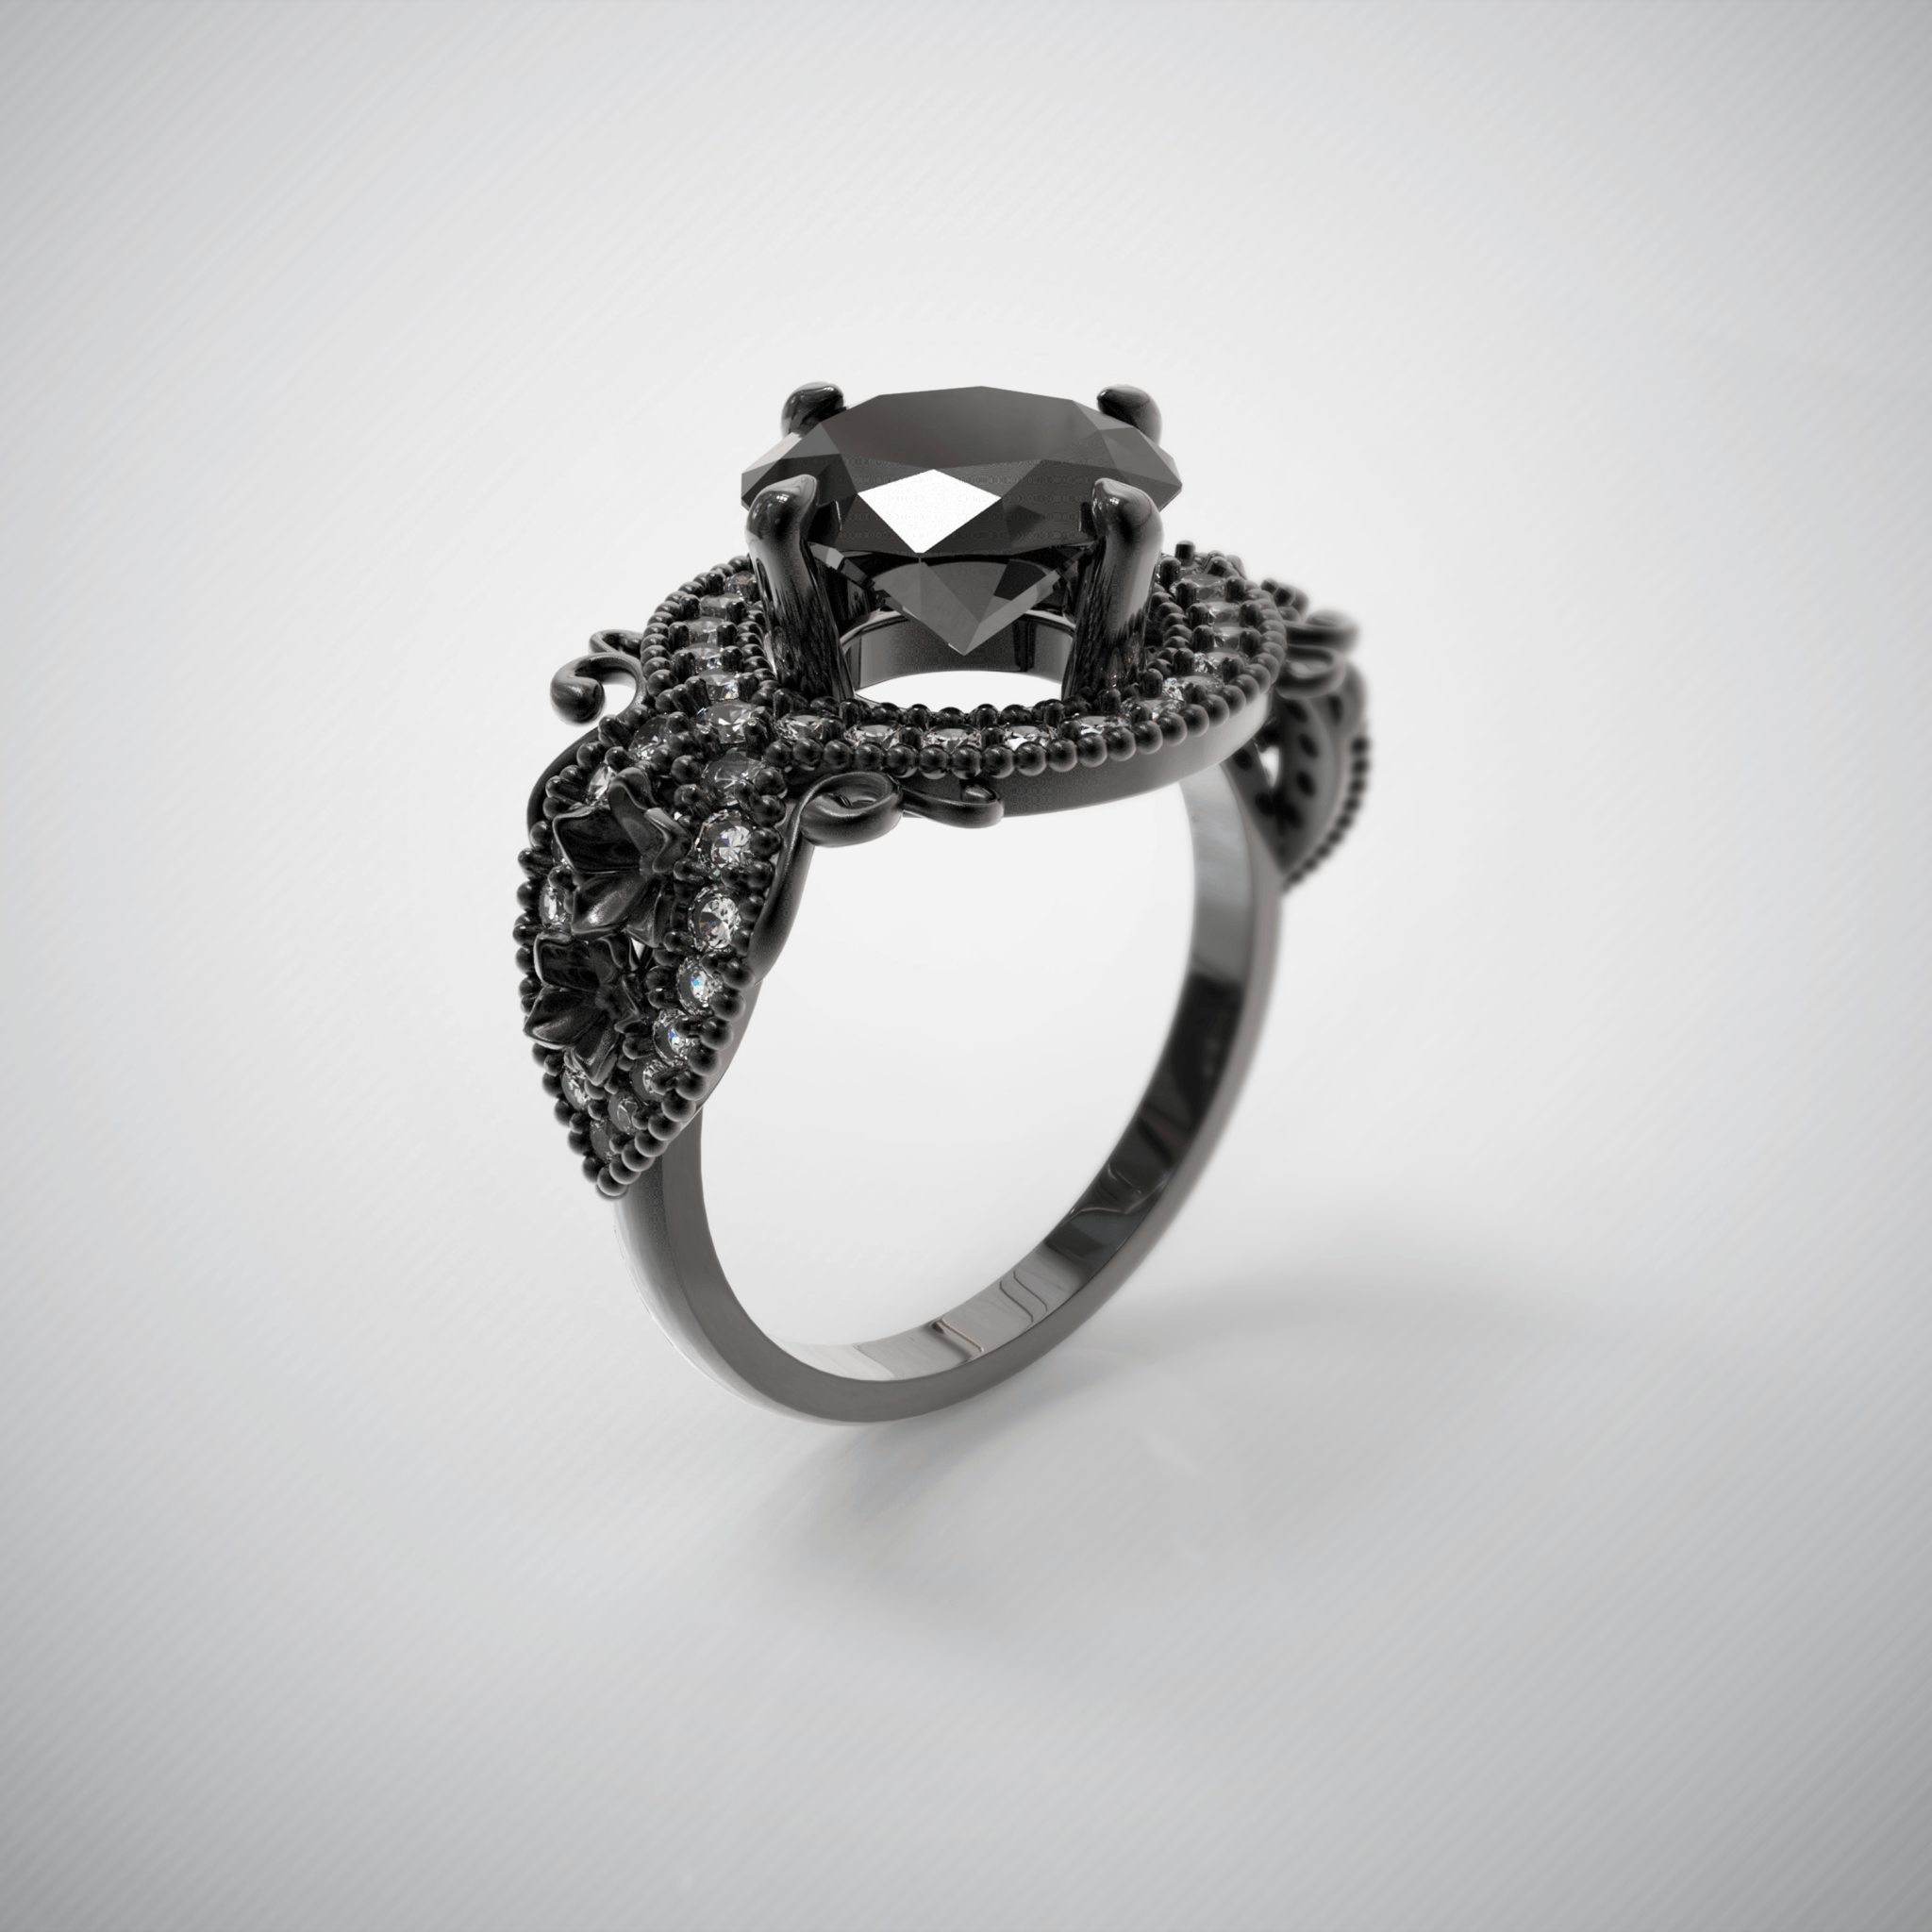 Unique Majestic Nature Engagement Ring No.42 in Black Gold - Black Spinel/Topaz - Roelavi